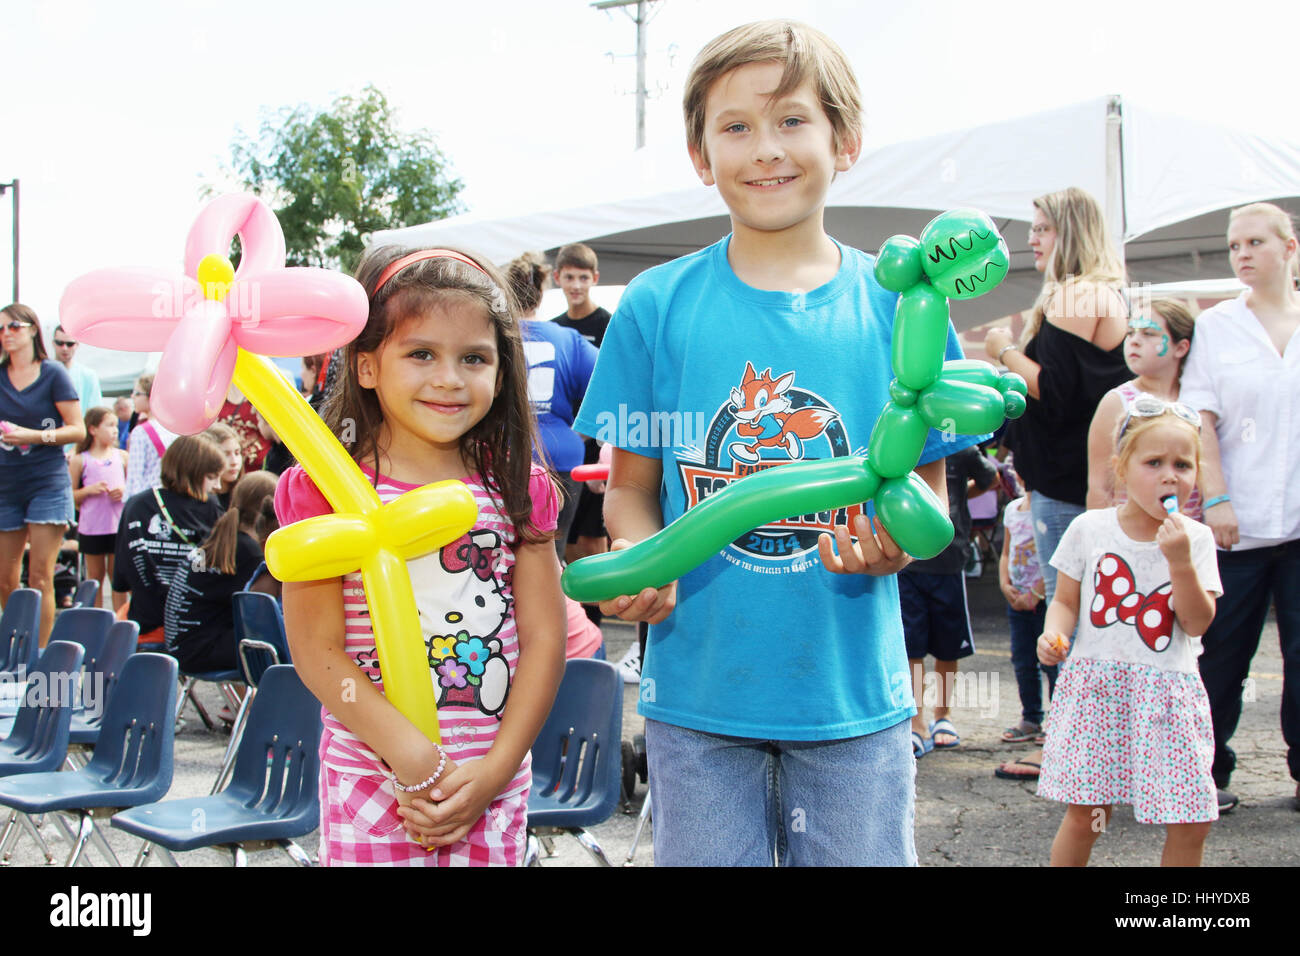 Jeune fille et un jeune garçon holding Balloon Flower et balloon animal. Beavercreek Popcorn Festival. Beavercreek, Dayton, Ohio, USA. Banque D'Images